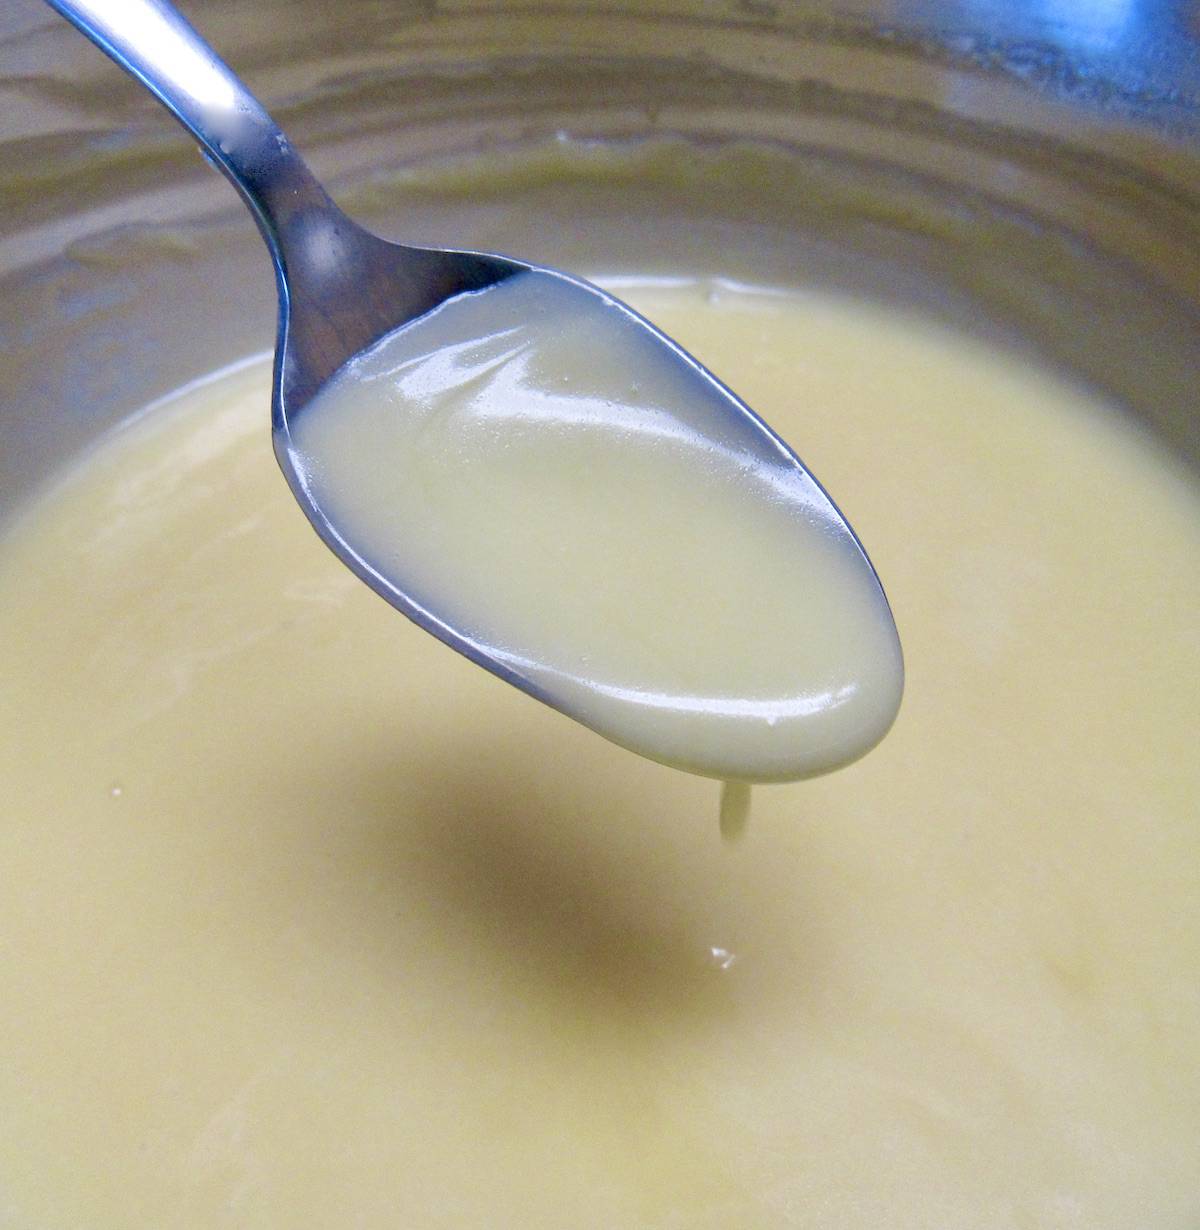 Keto Sweetened Condensed Milk in saucepan dripping off spoon